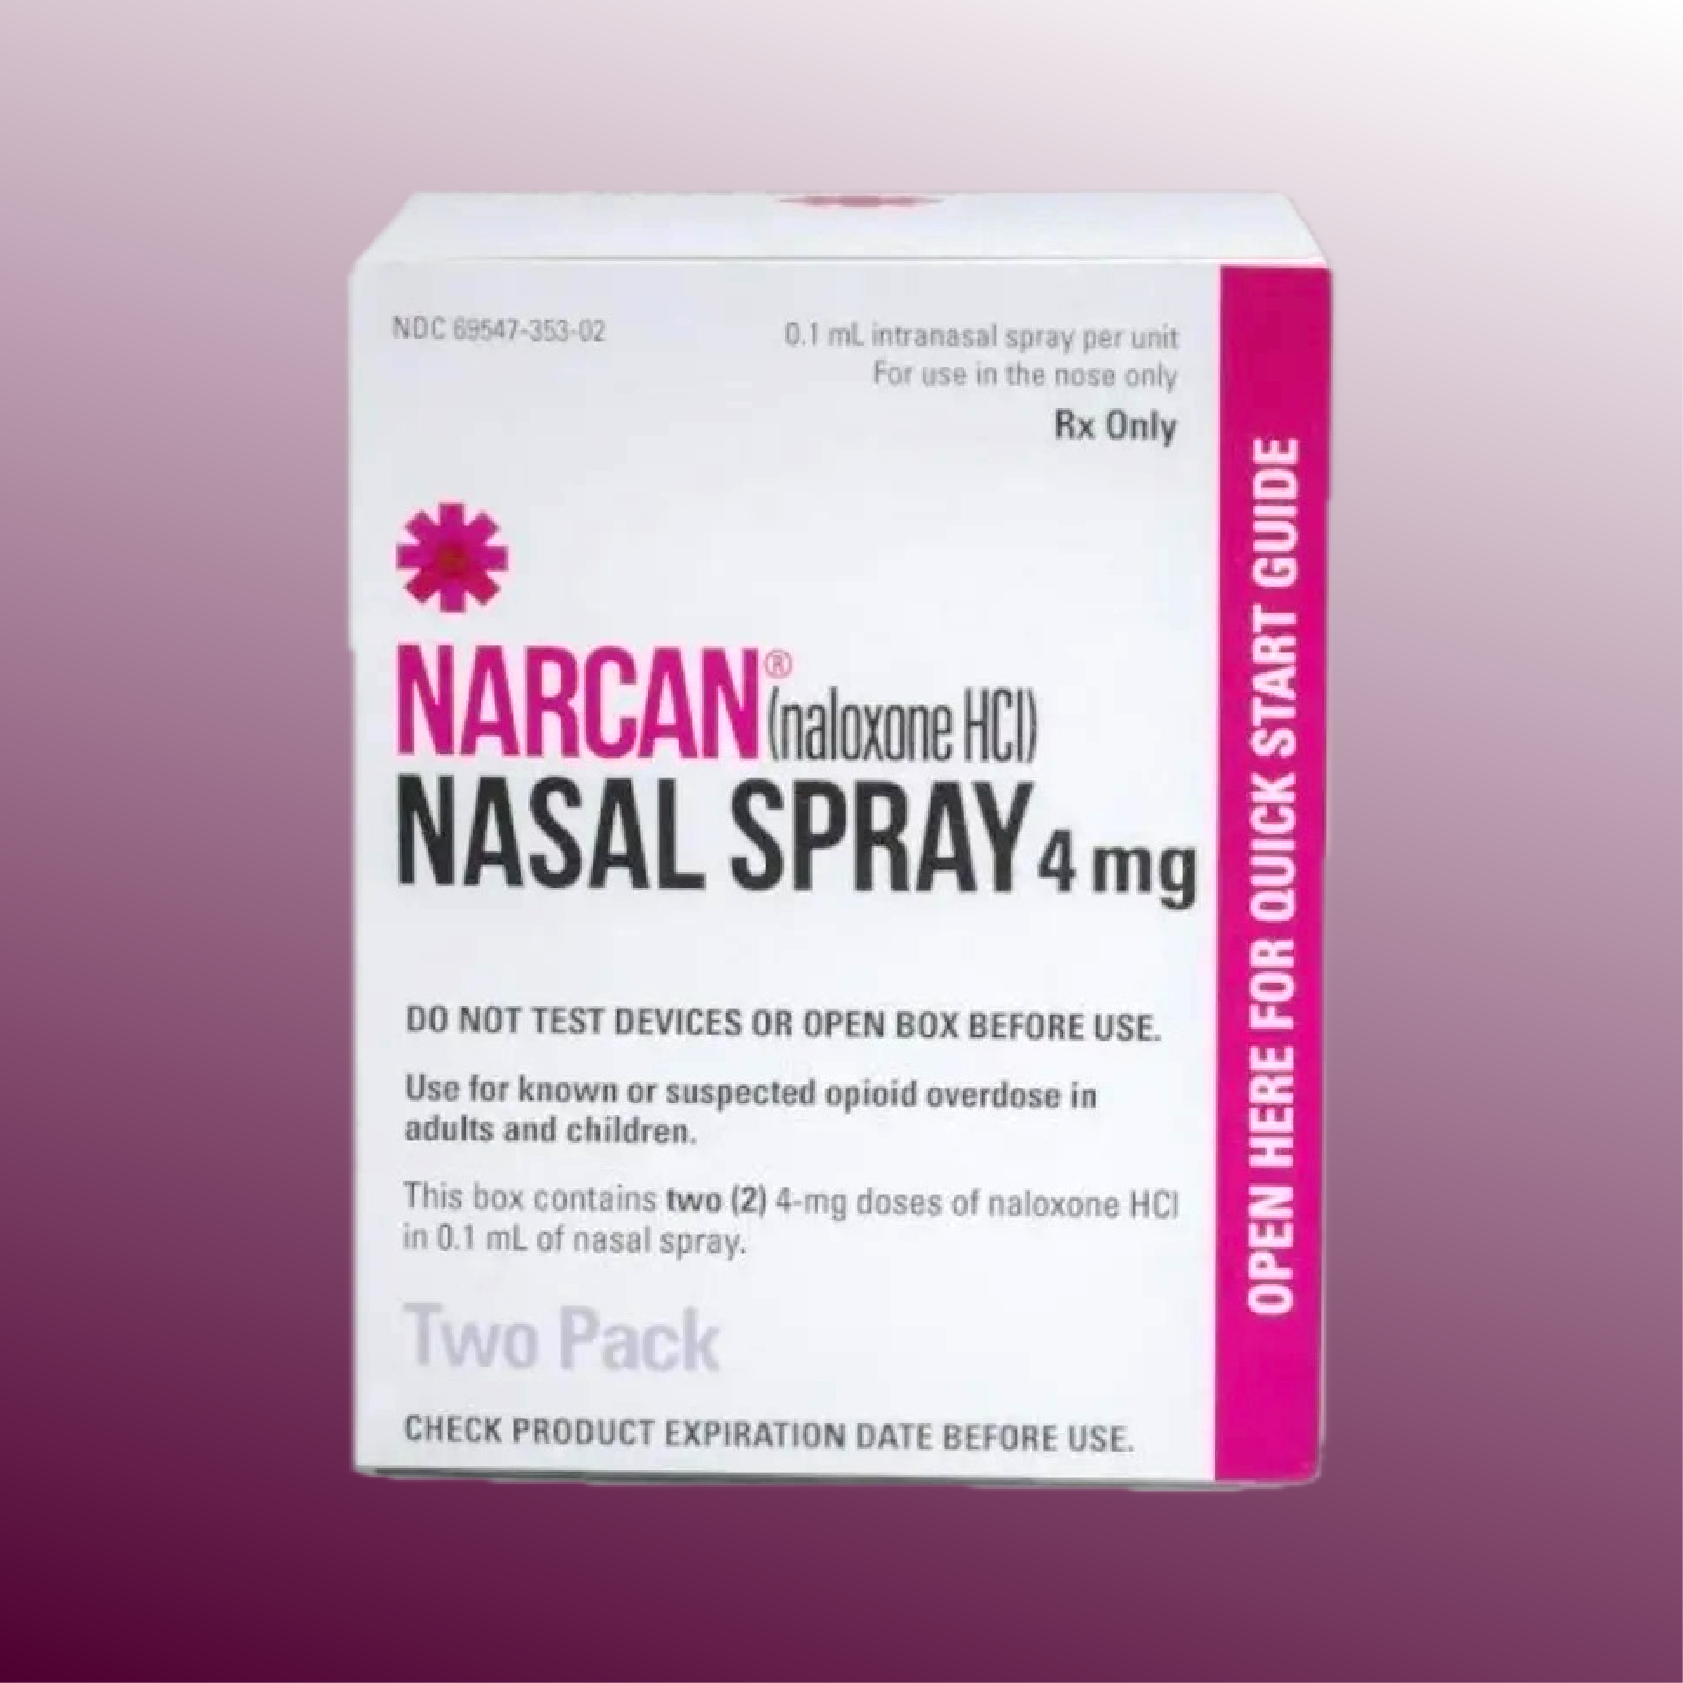 Image screenshot of Narcan nasal spray box for naloxone